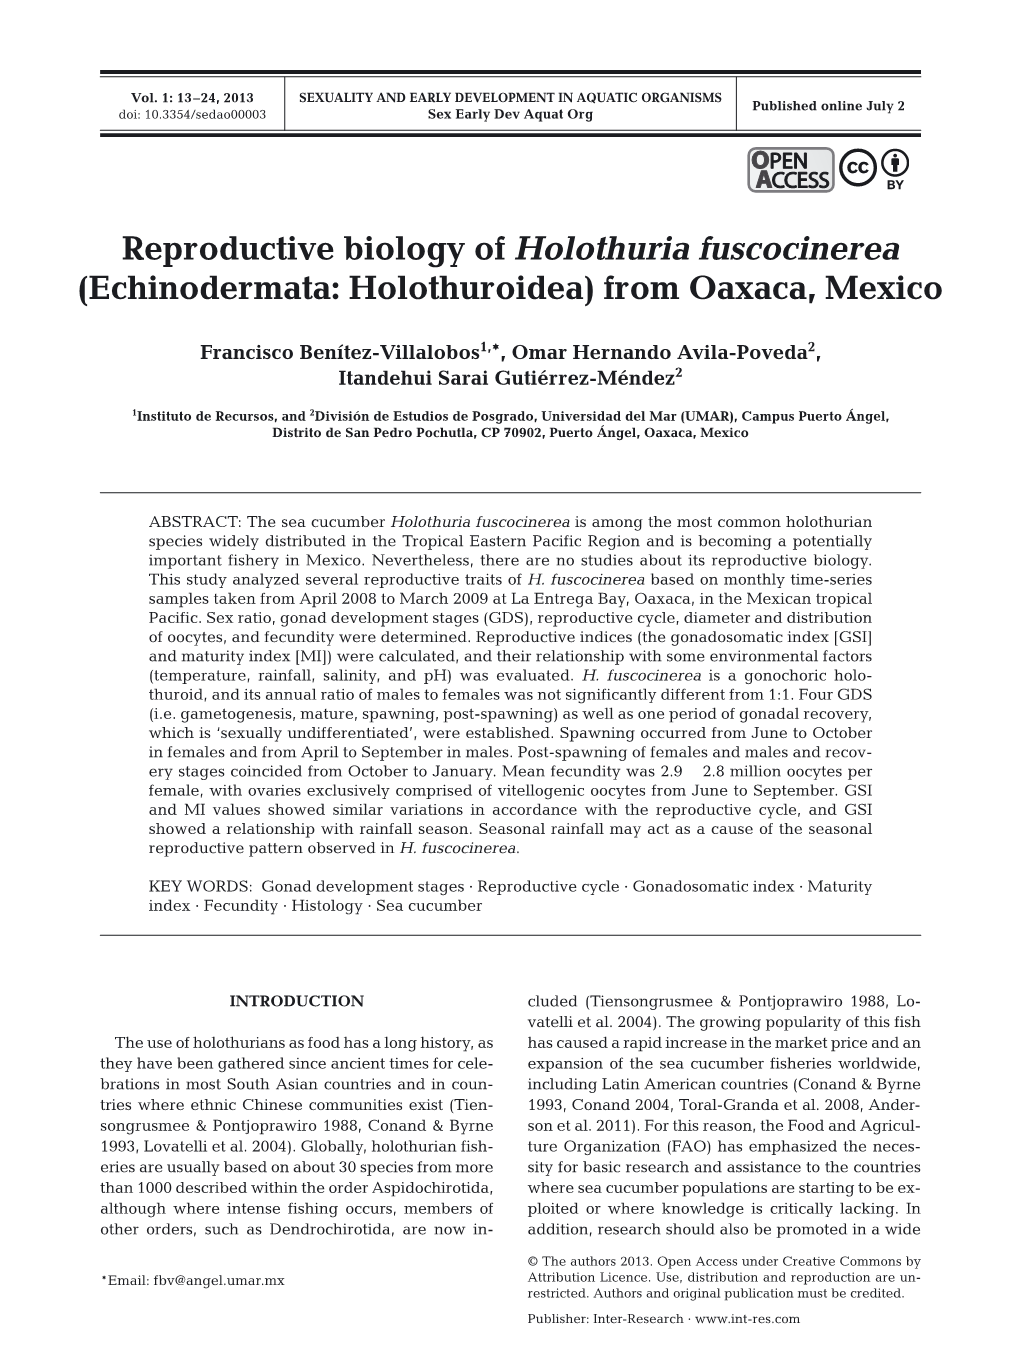 Reproductive Biology of Holothuria Fuscocinerea (Echinodermata: Holothuroidea) from Oaxaca, Mexico